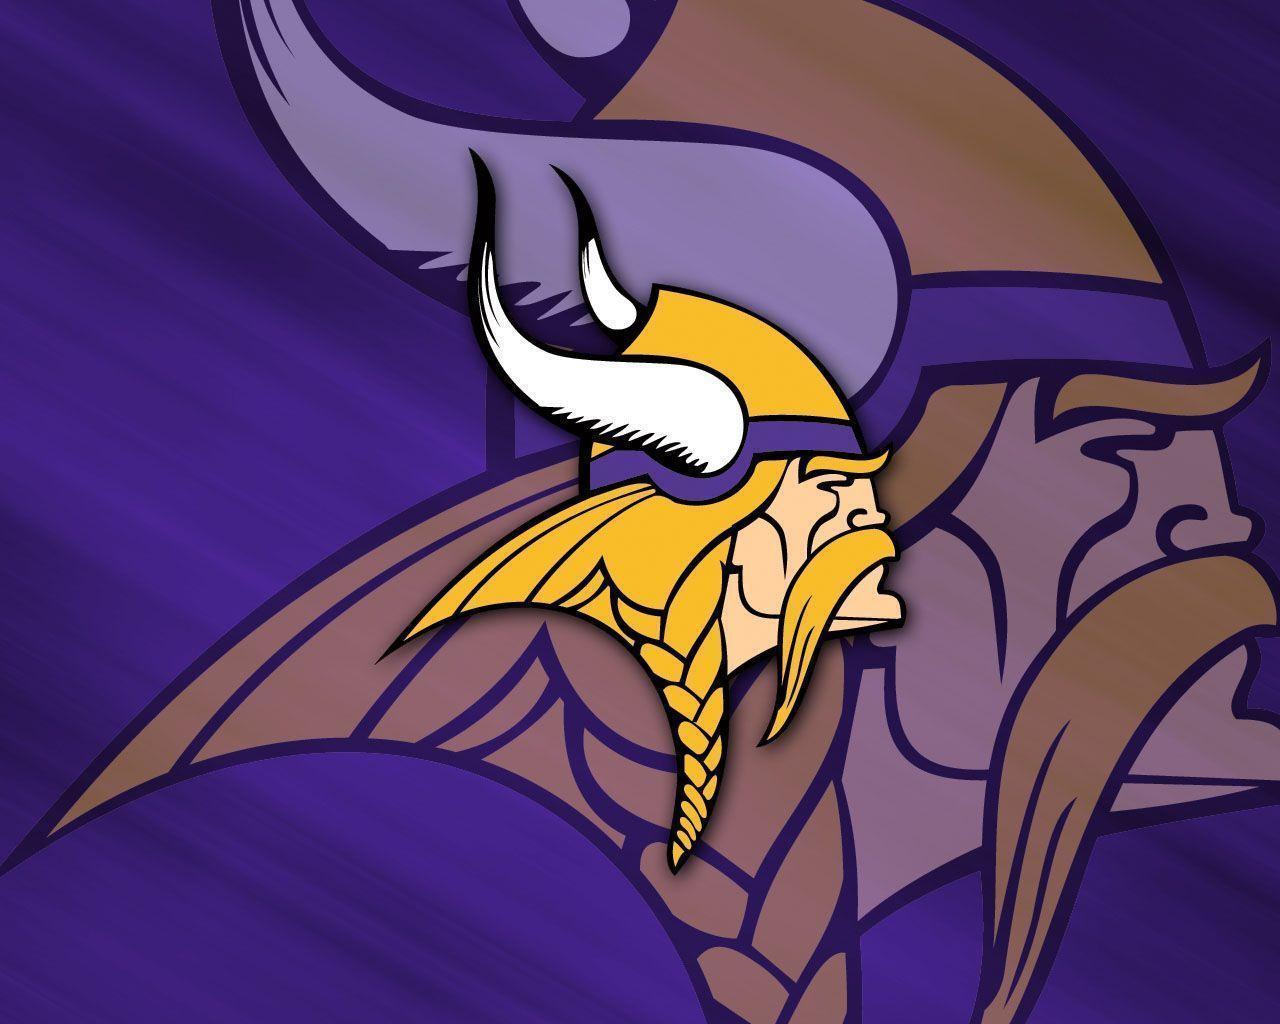 Simple Minnesota Vikings Team Logo Wallpaper. Download High